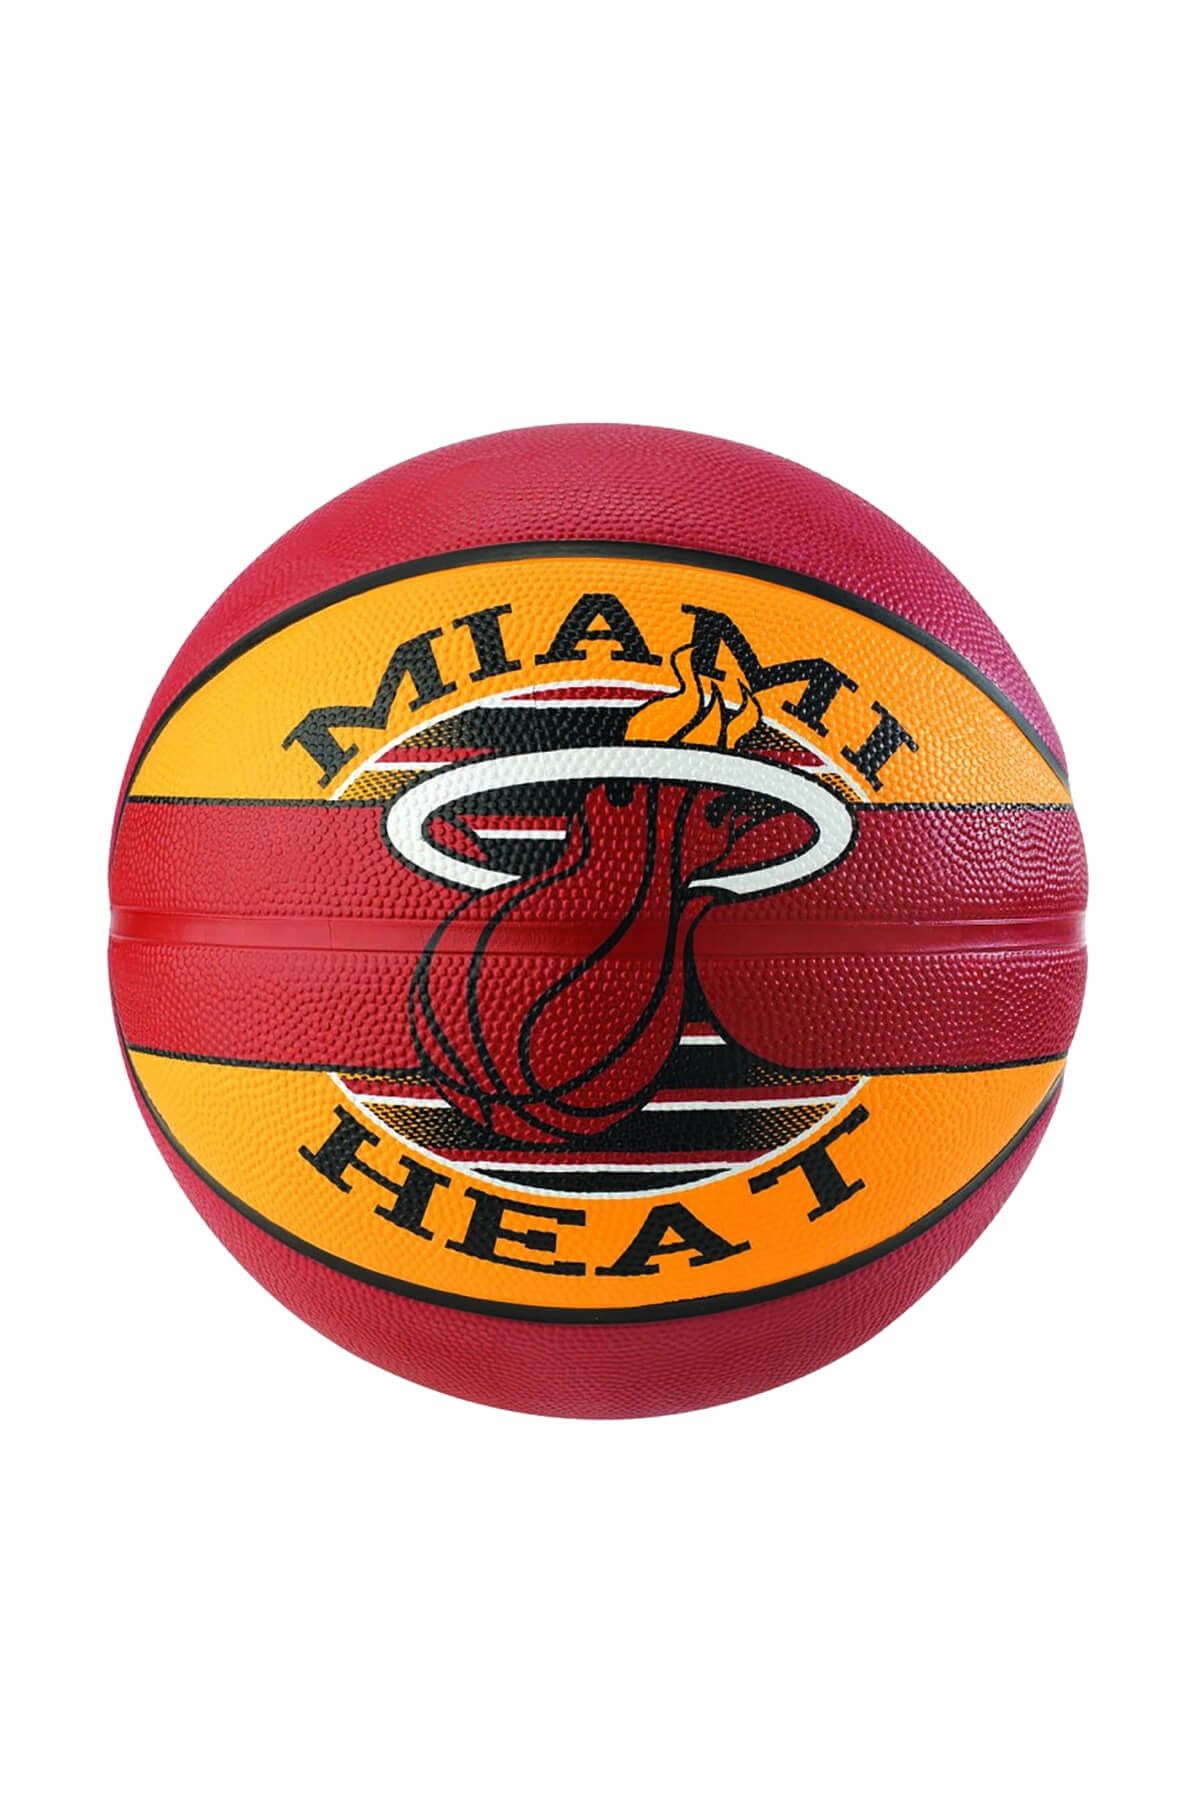 Spalding Spalding NBA Team Miami Heat Basketbol Topu 83-507Z